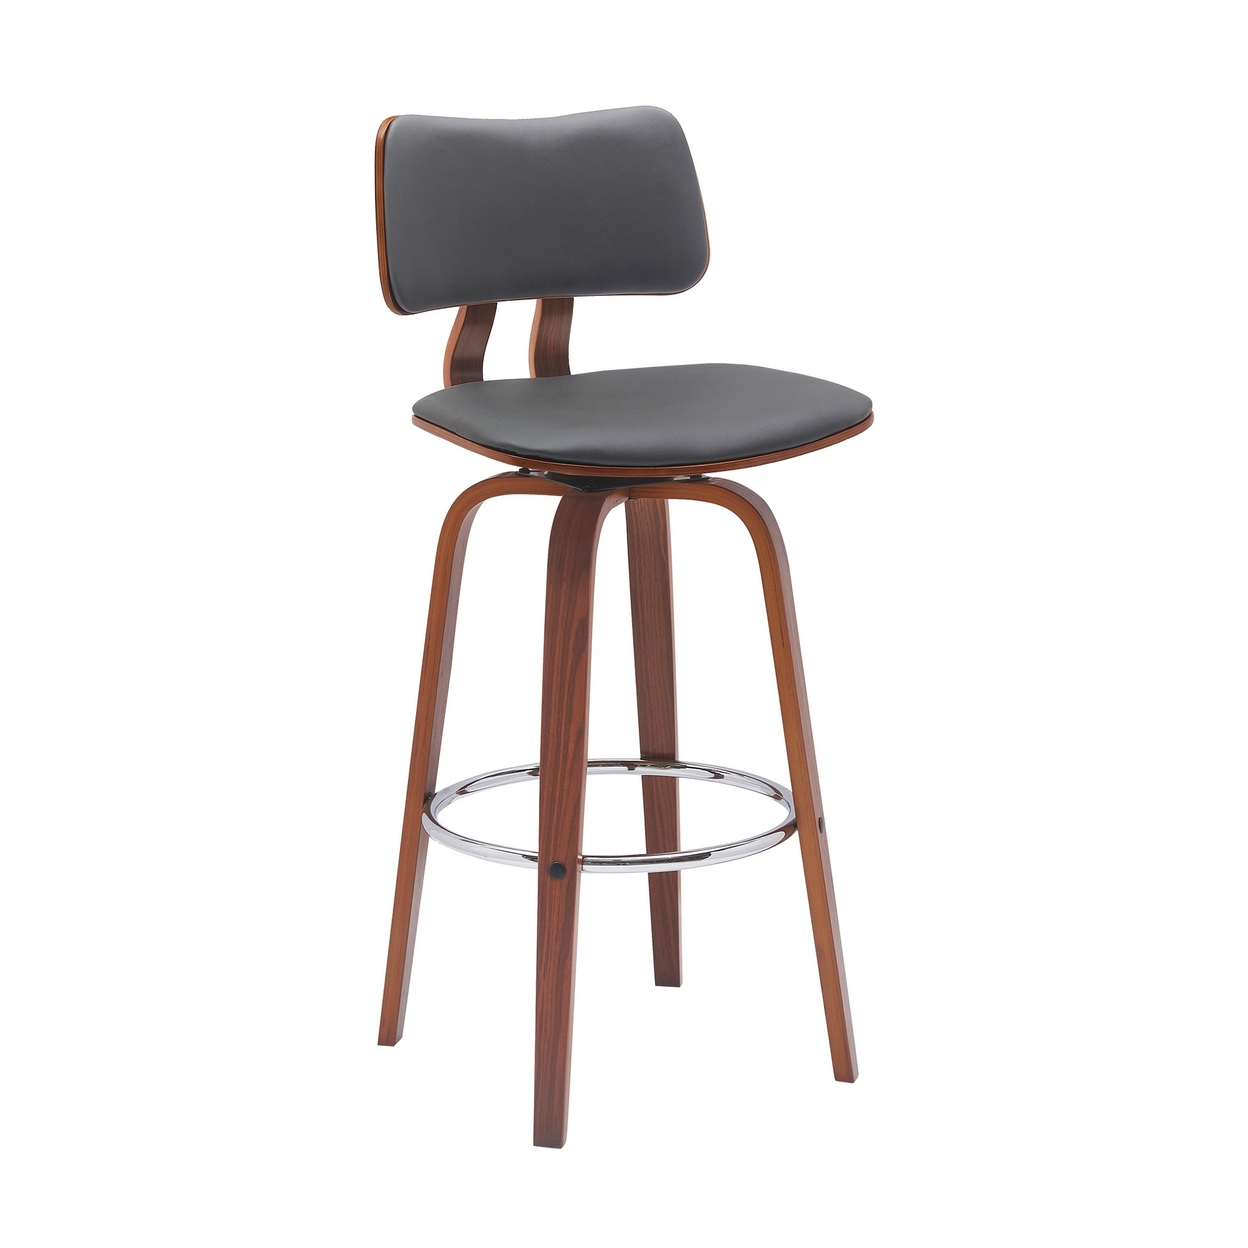 Pino 30 Inch Swivel Barstool Chair, Gray Faux Leather, Walnut Brown Wood - Saltoro Sherpi